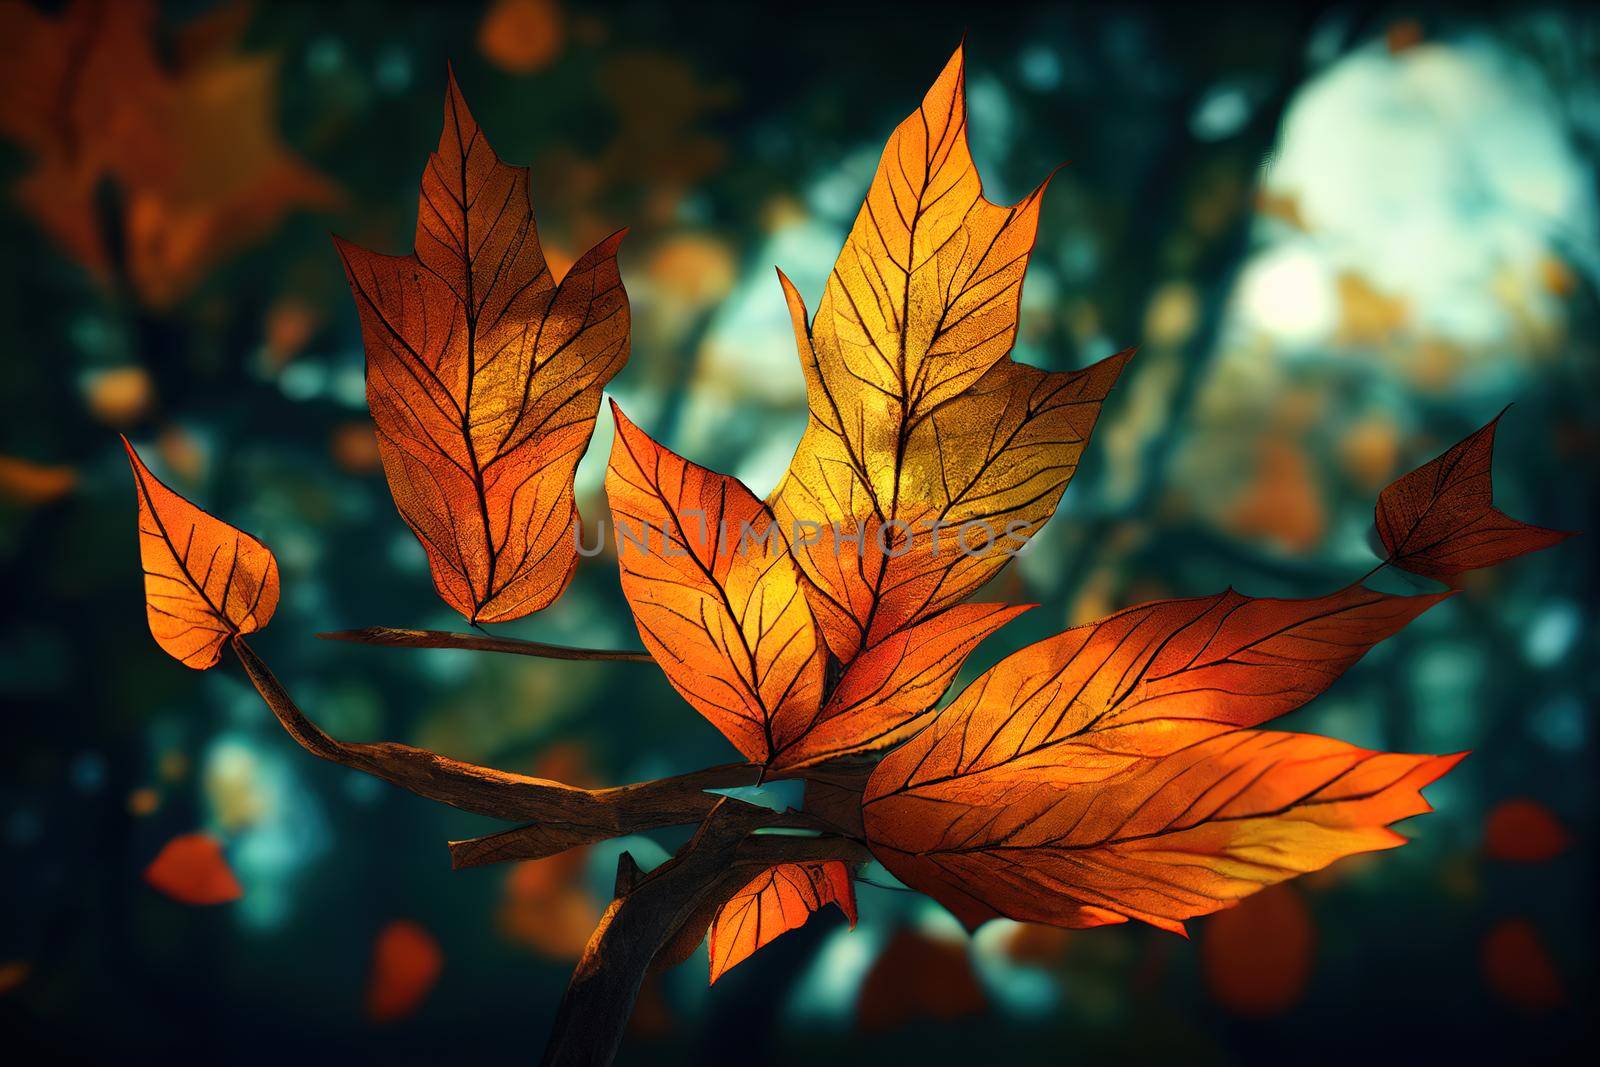 autumn leaves 9. High quality 3d illustration